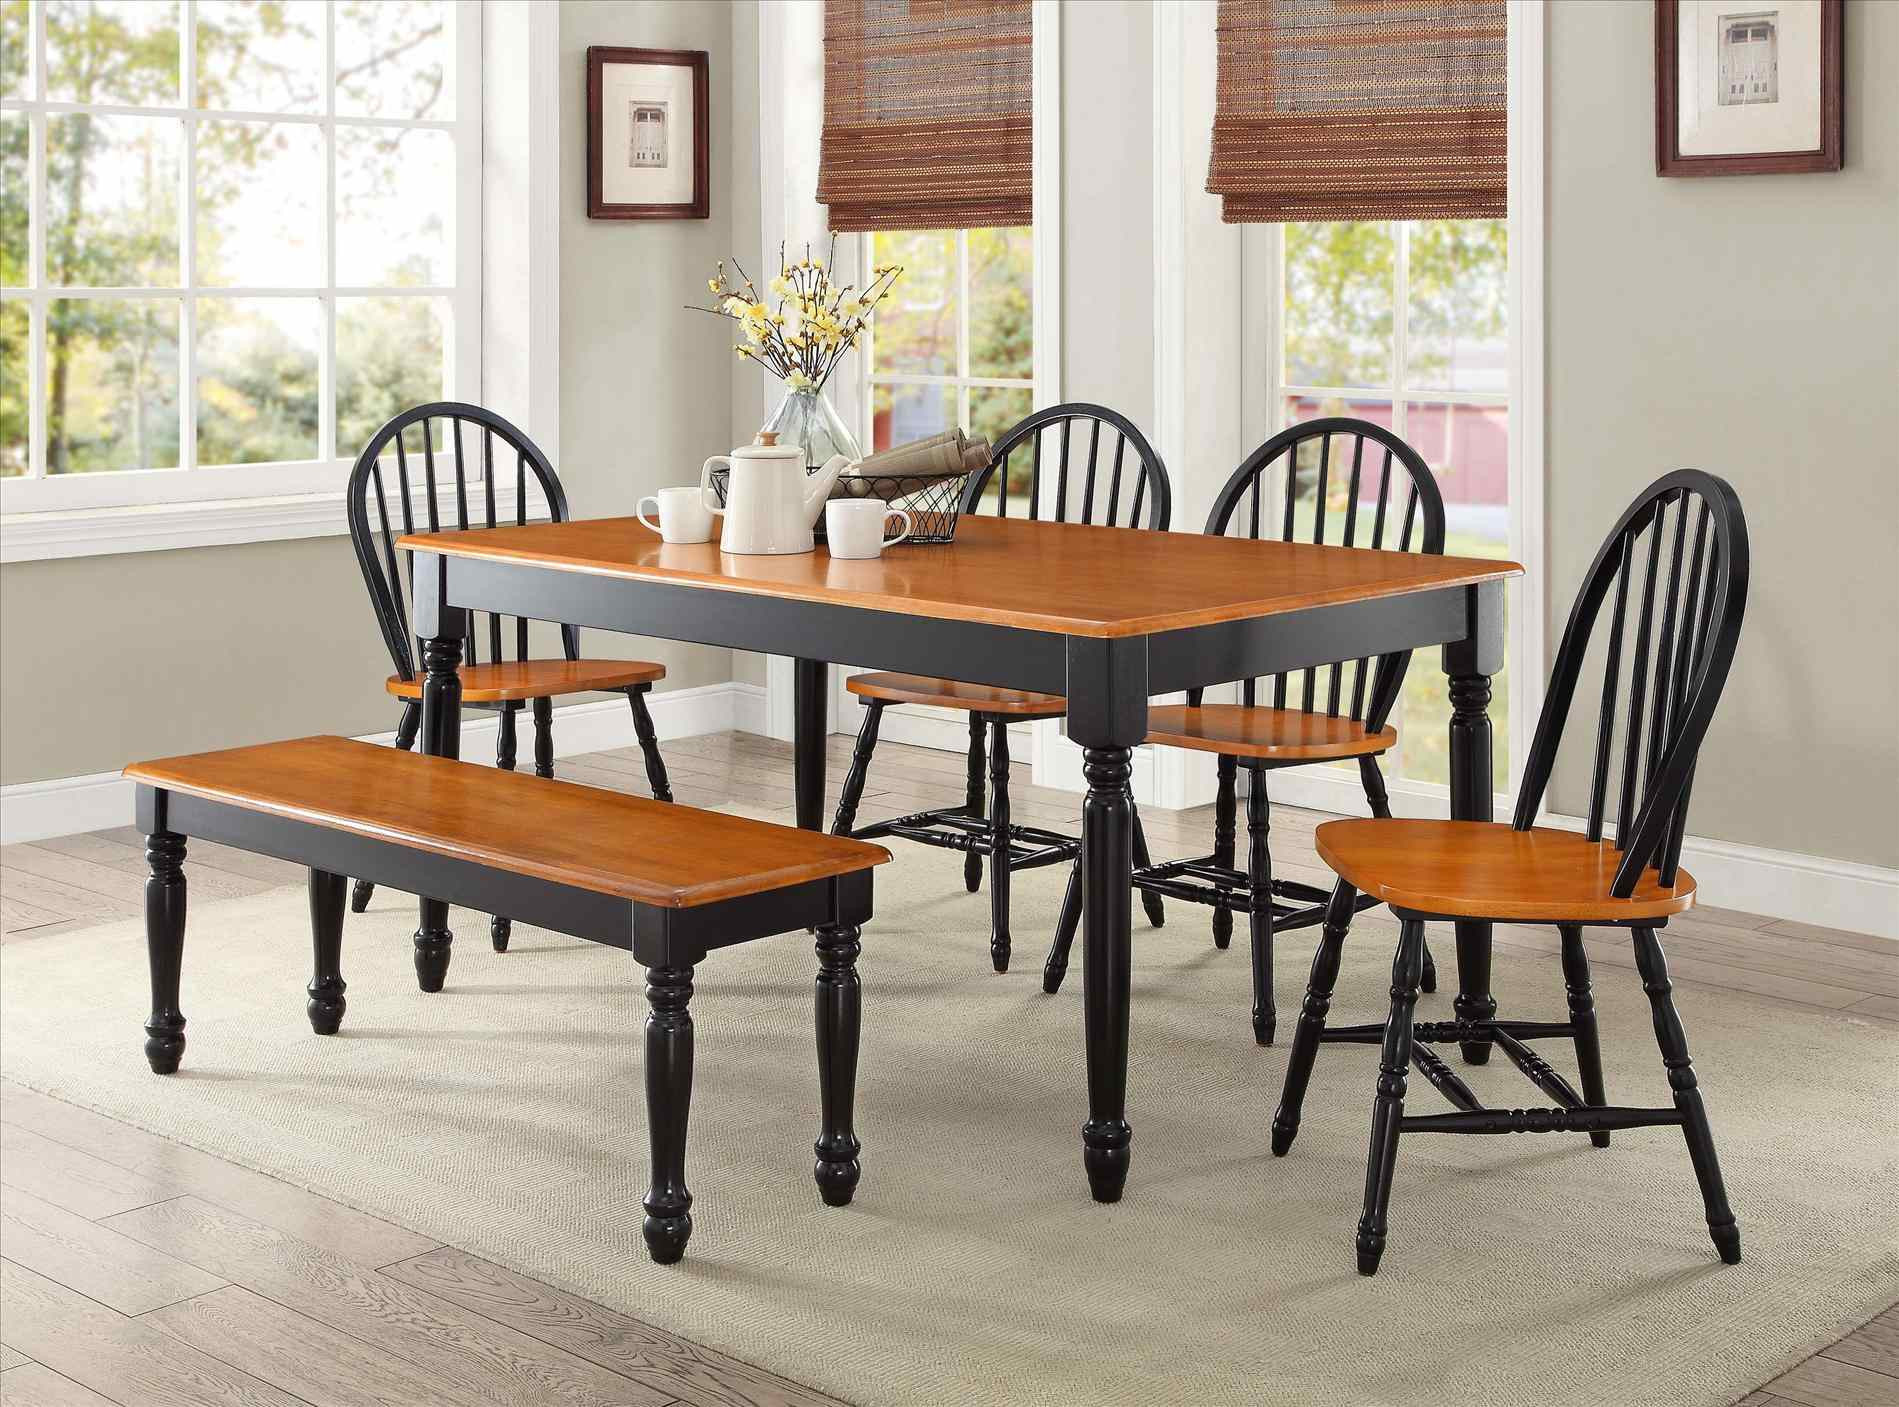 Best ideas about Walmart Dining Table Set
. Save or Pin Room Furniture Piece Set Walmart Cheap U Walmart Now.